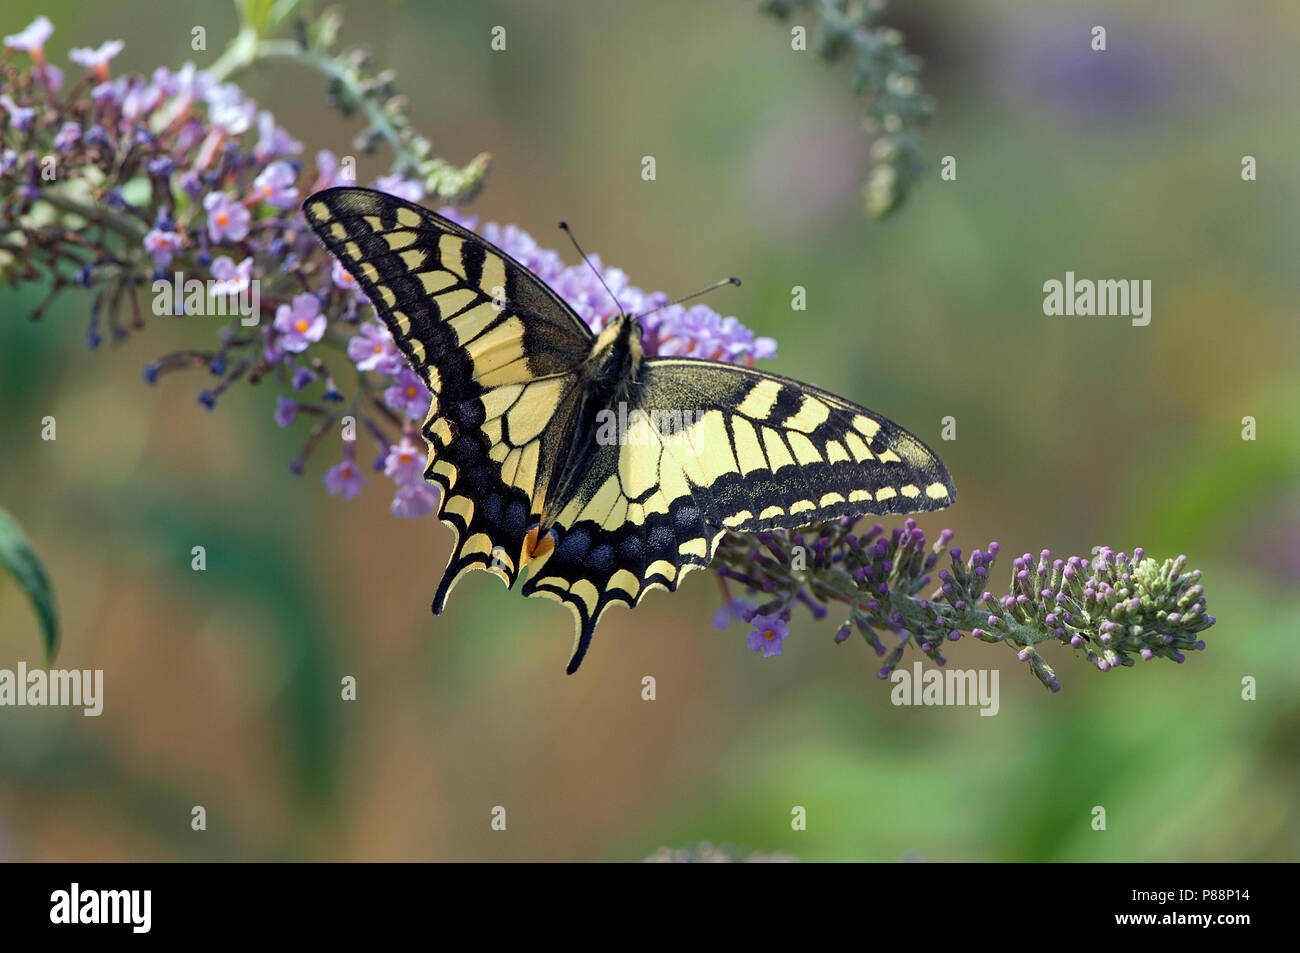 Koninginnenpage op Buddleja / Swallowtail on Buddleja (Papilio machaon) Stock Photo